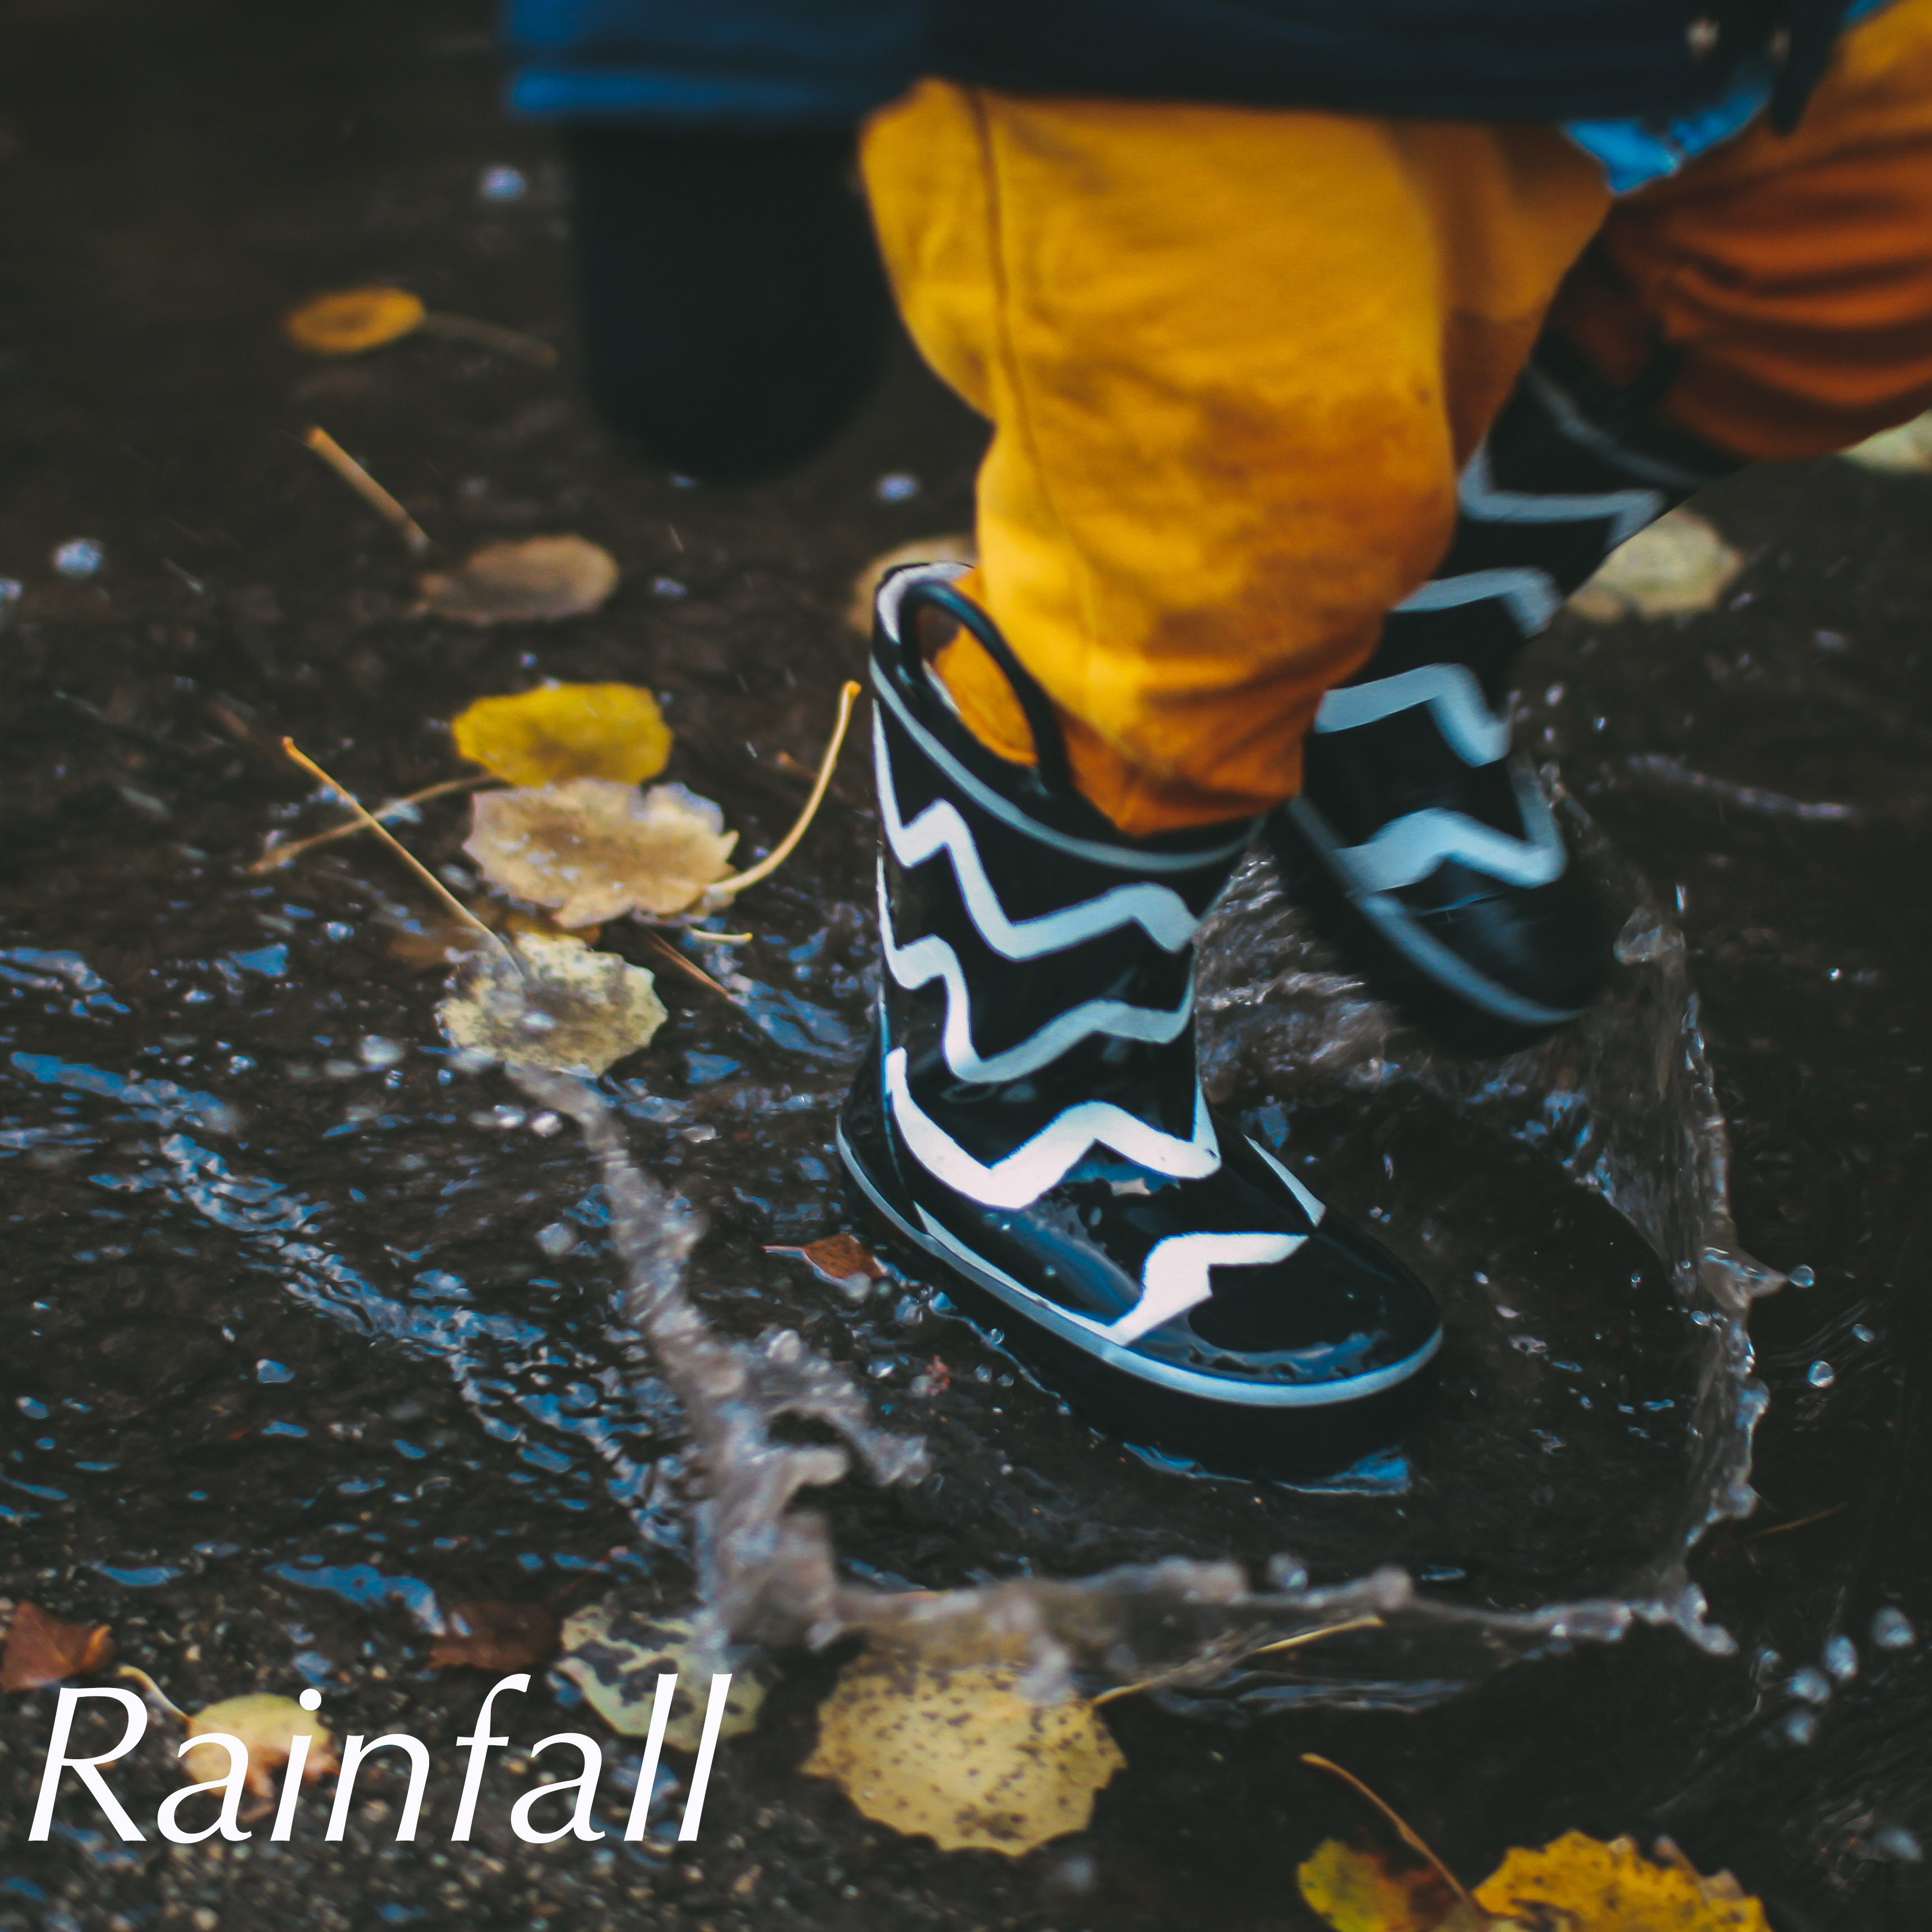 14 Rainfall Tracks - a Compiilation for Yoga and Meditation or Sleep